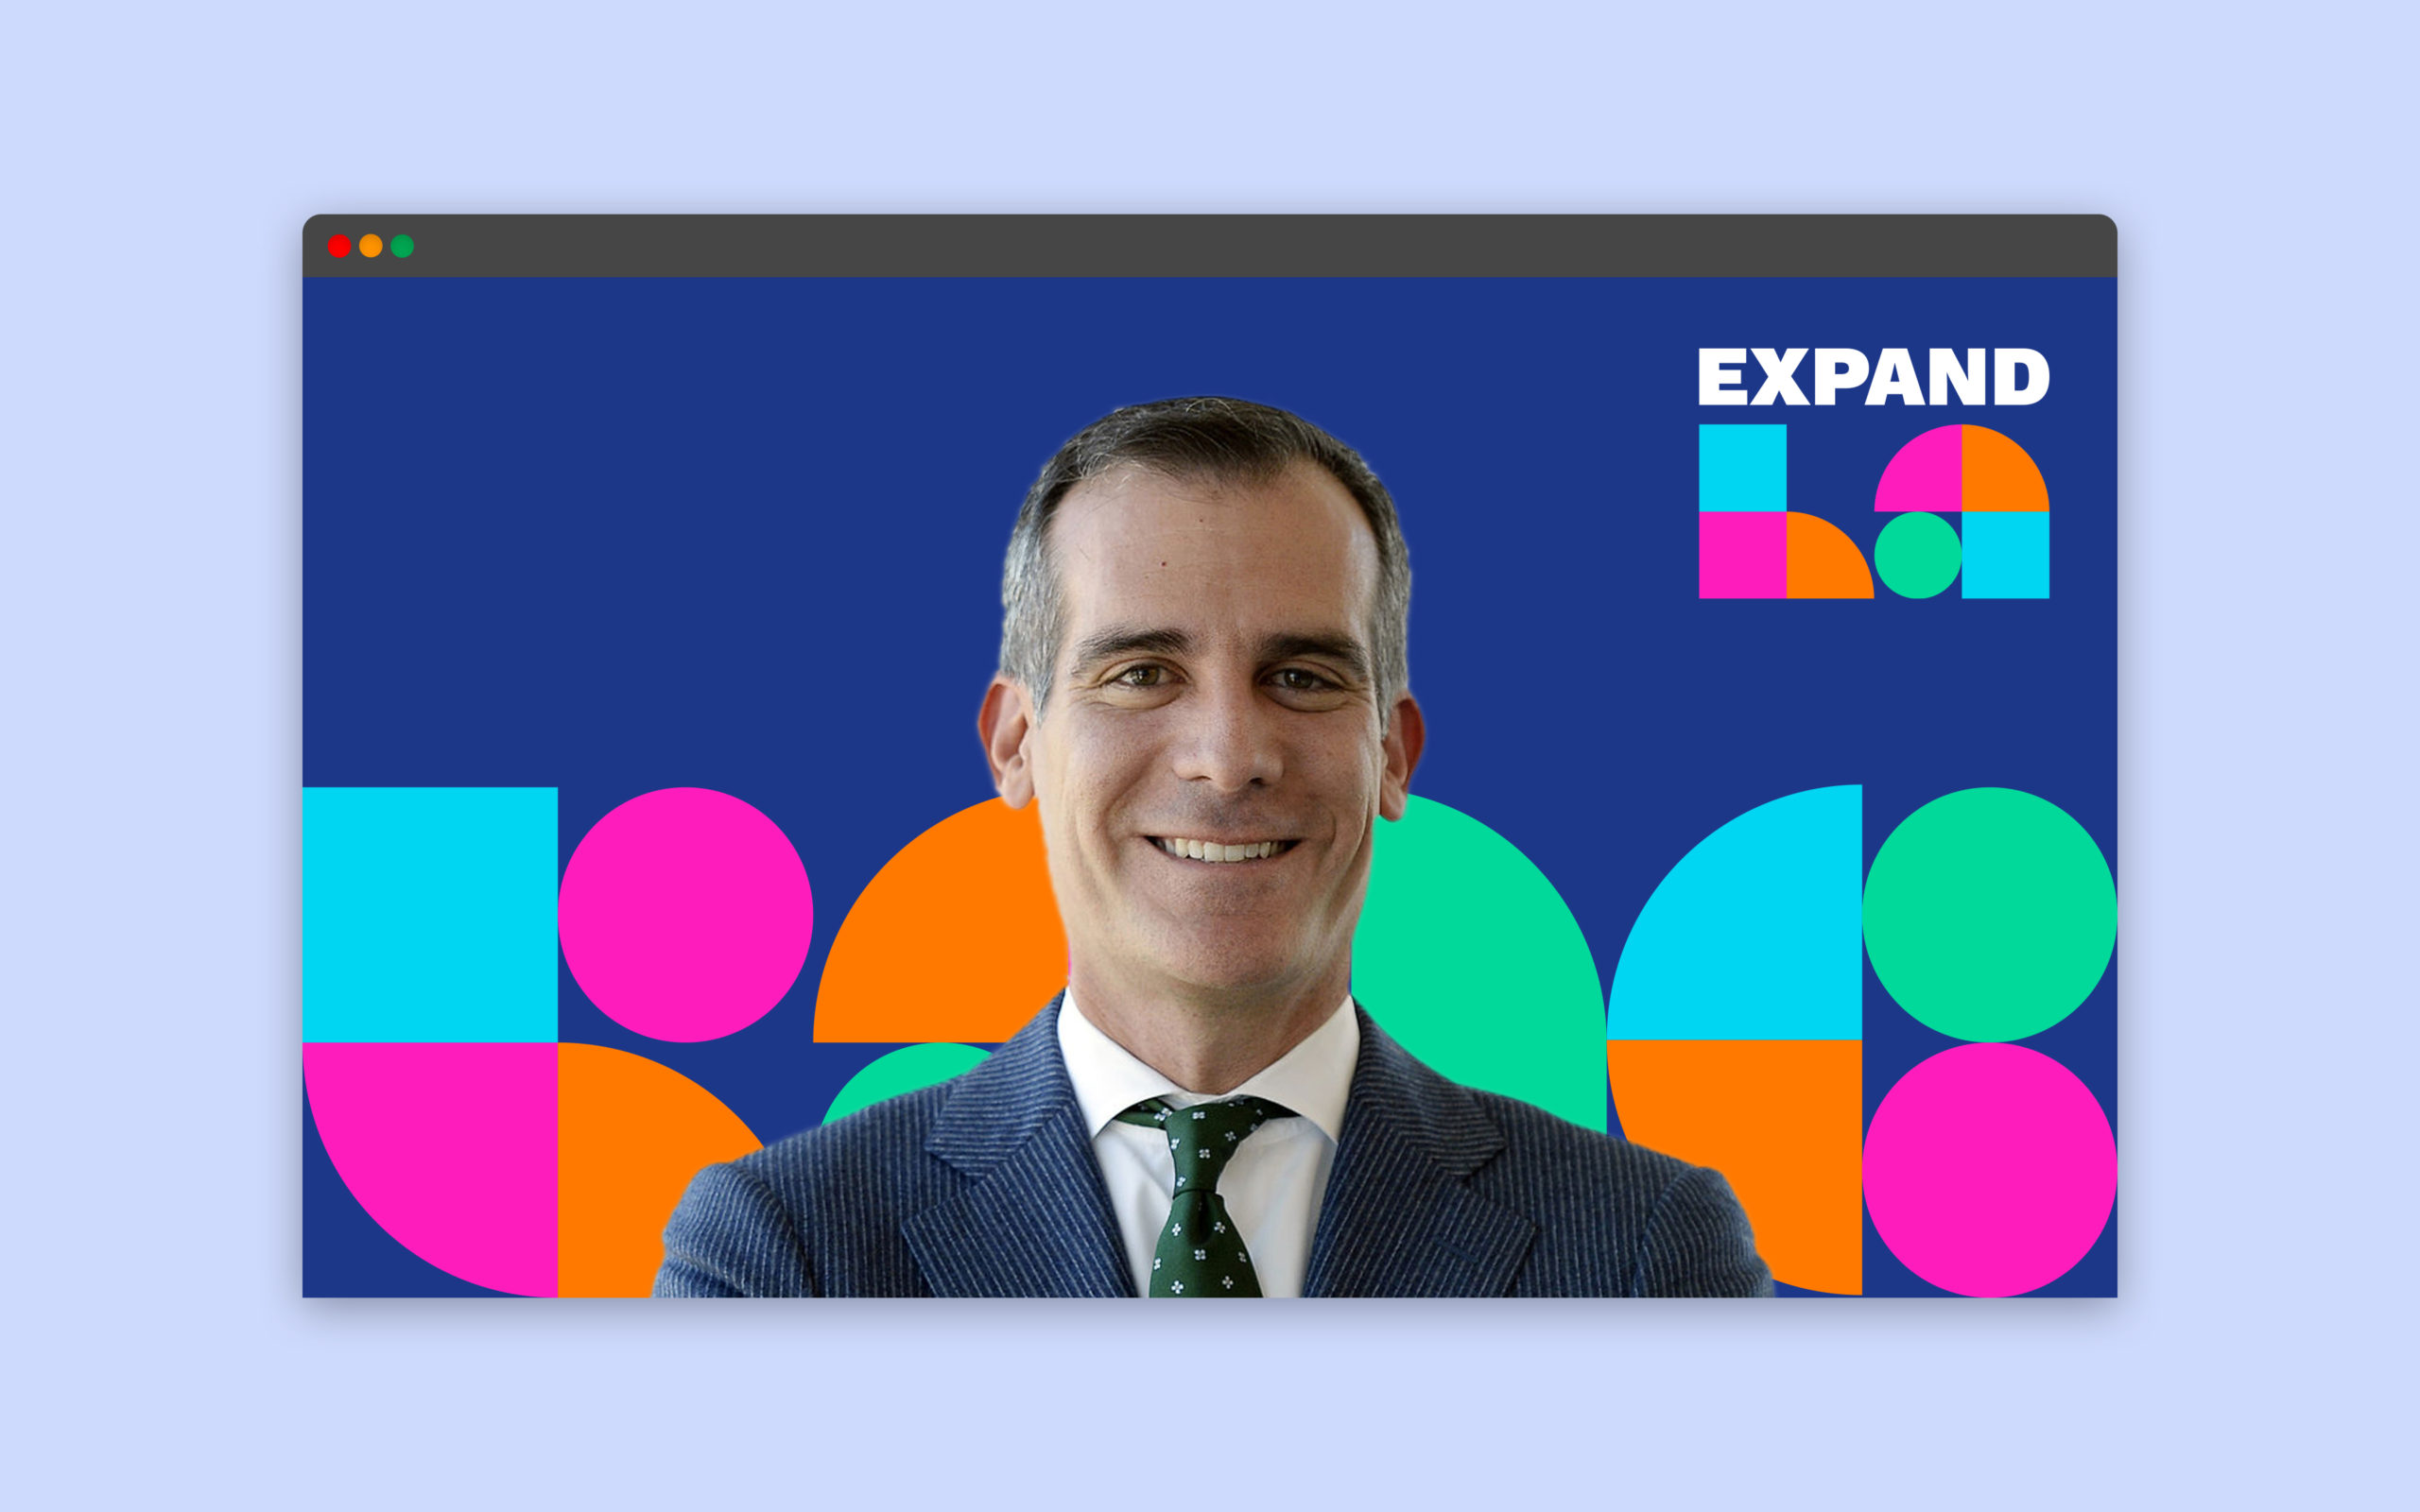 Zoom background for ExpandLA brand designed by Kilter.